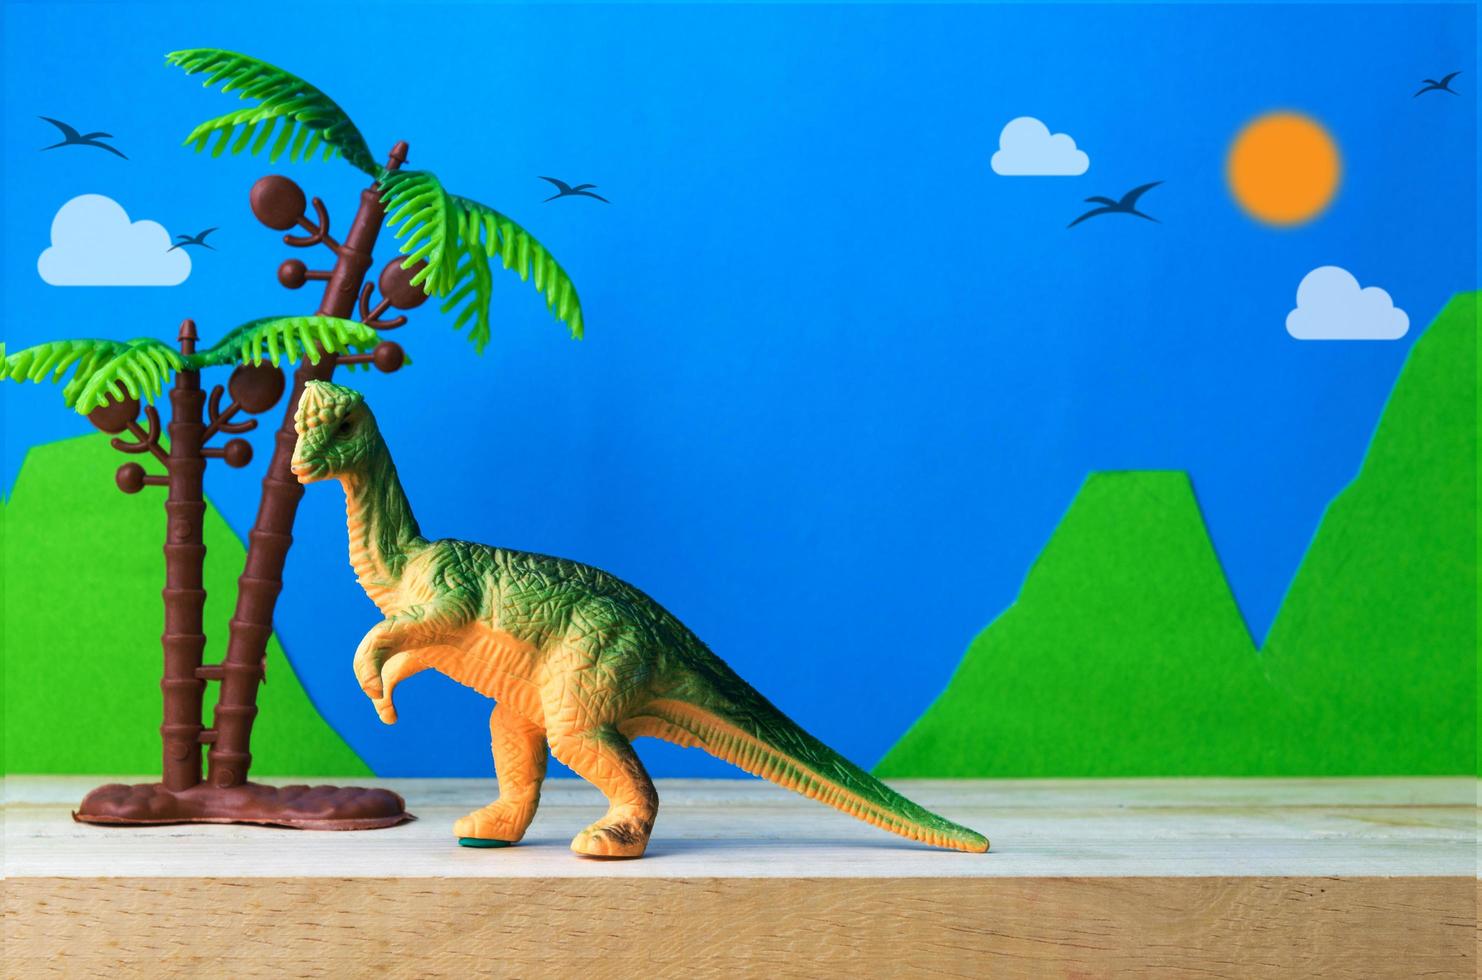 modelo de juguete de dinosaurio pachycephalosaurus sobre fondo de modelos salvajes foto